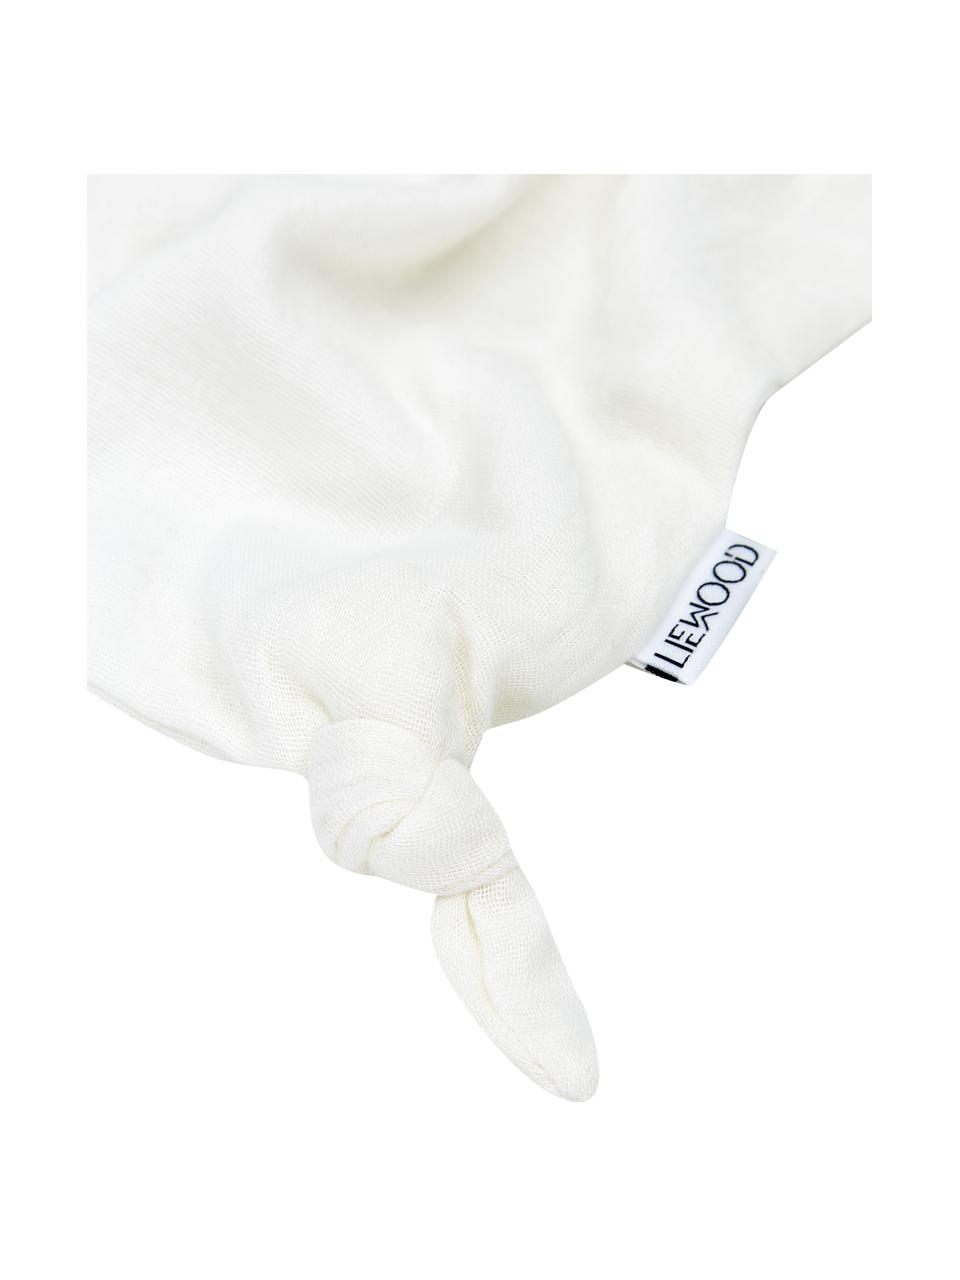 Muchláček Agnete, 100 % bio bavlna, s certifikátem Oeko-tex, Bílá, černá, Š 35 cm, D 35 cm